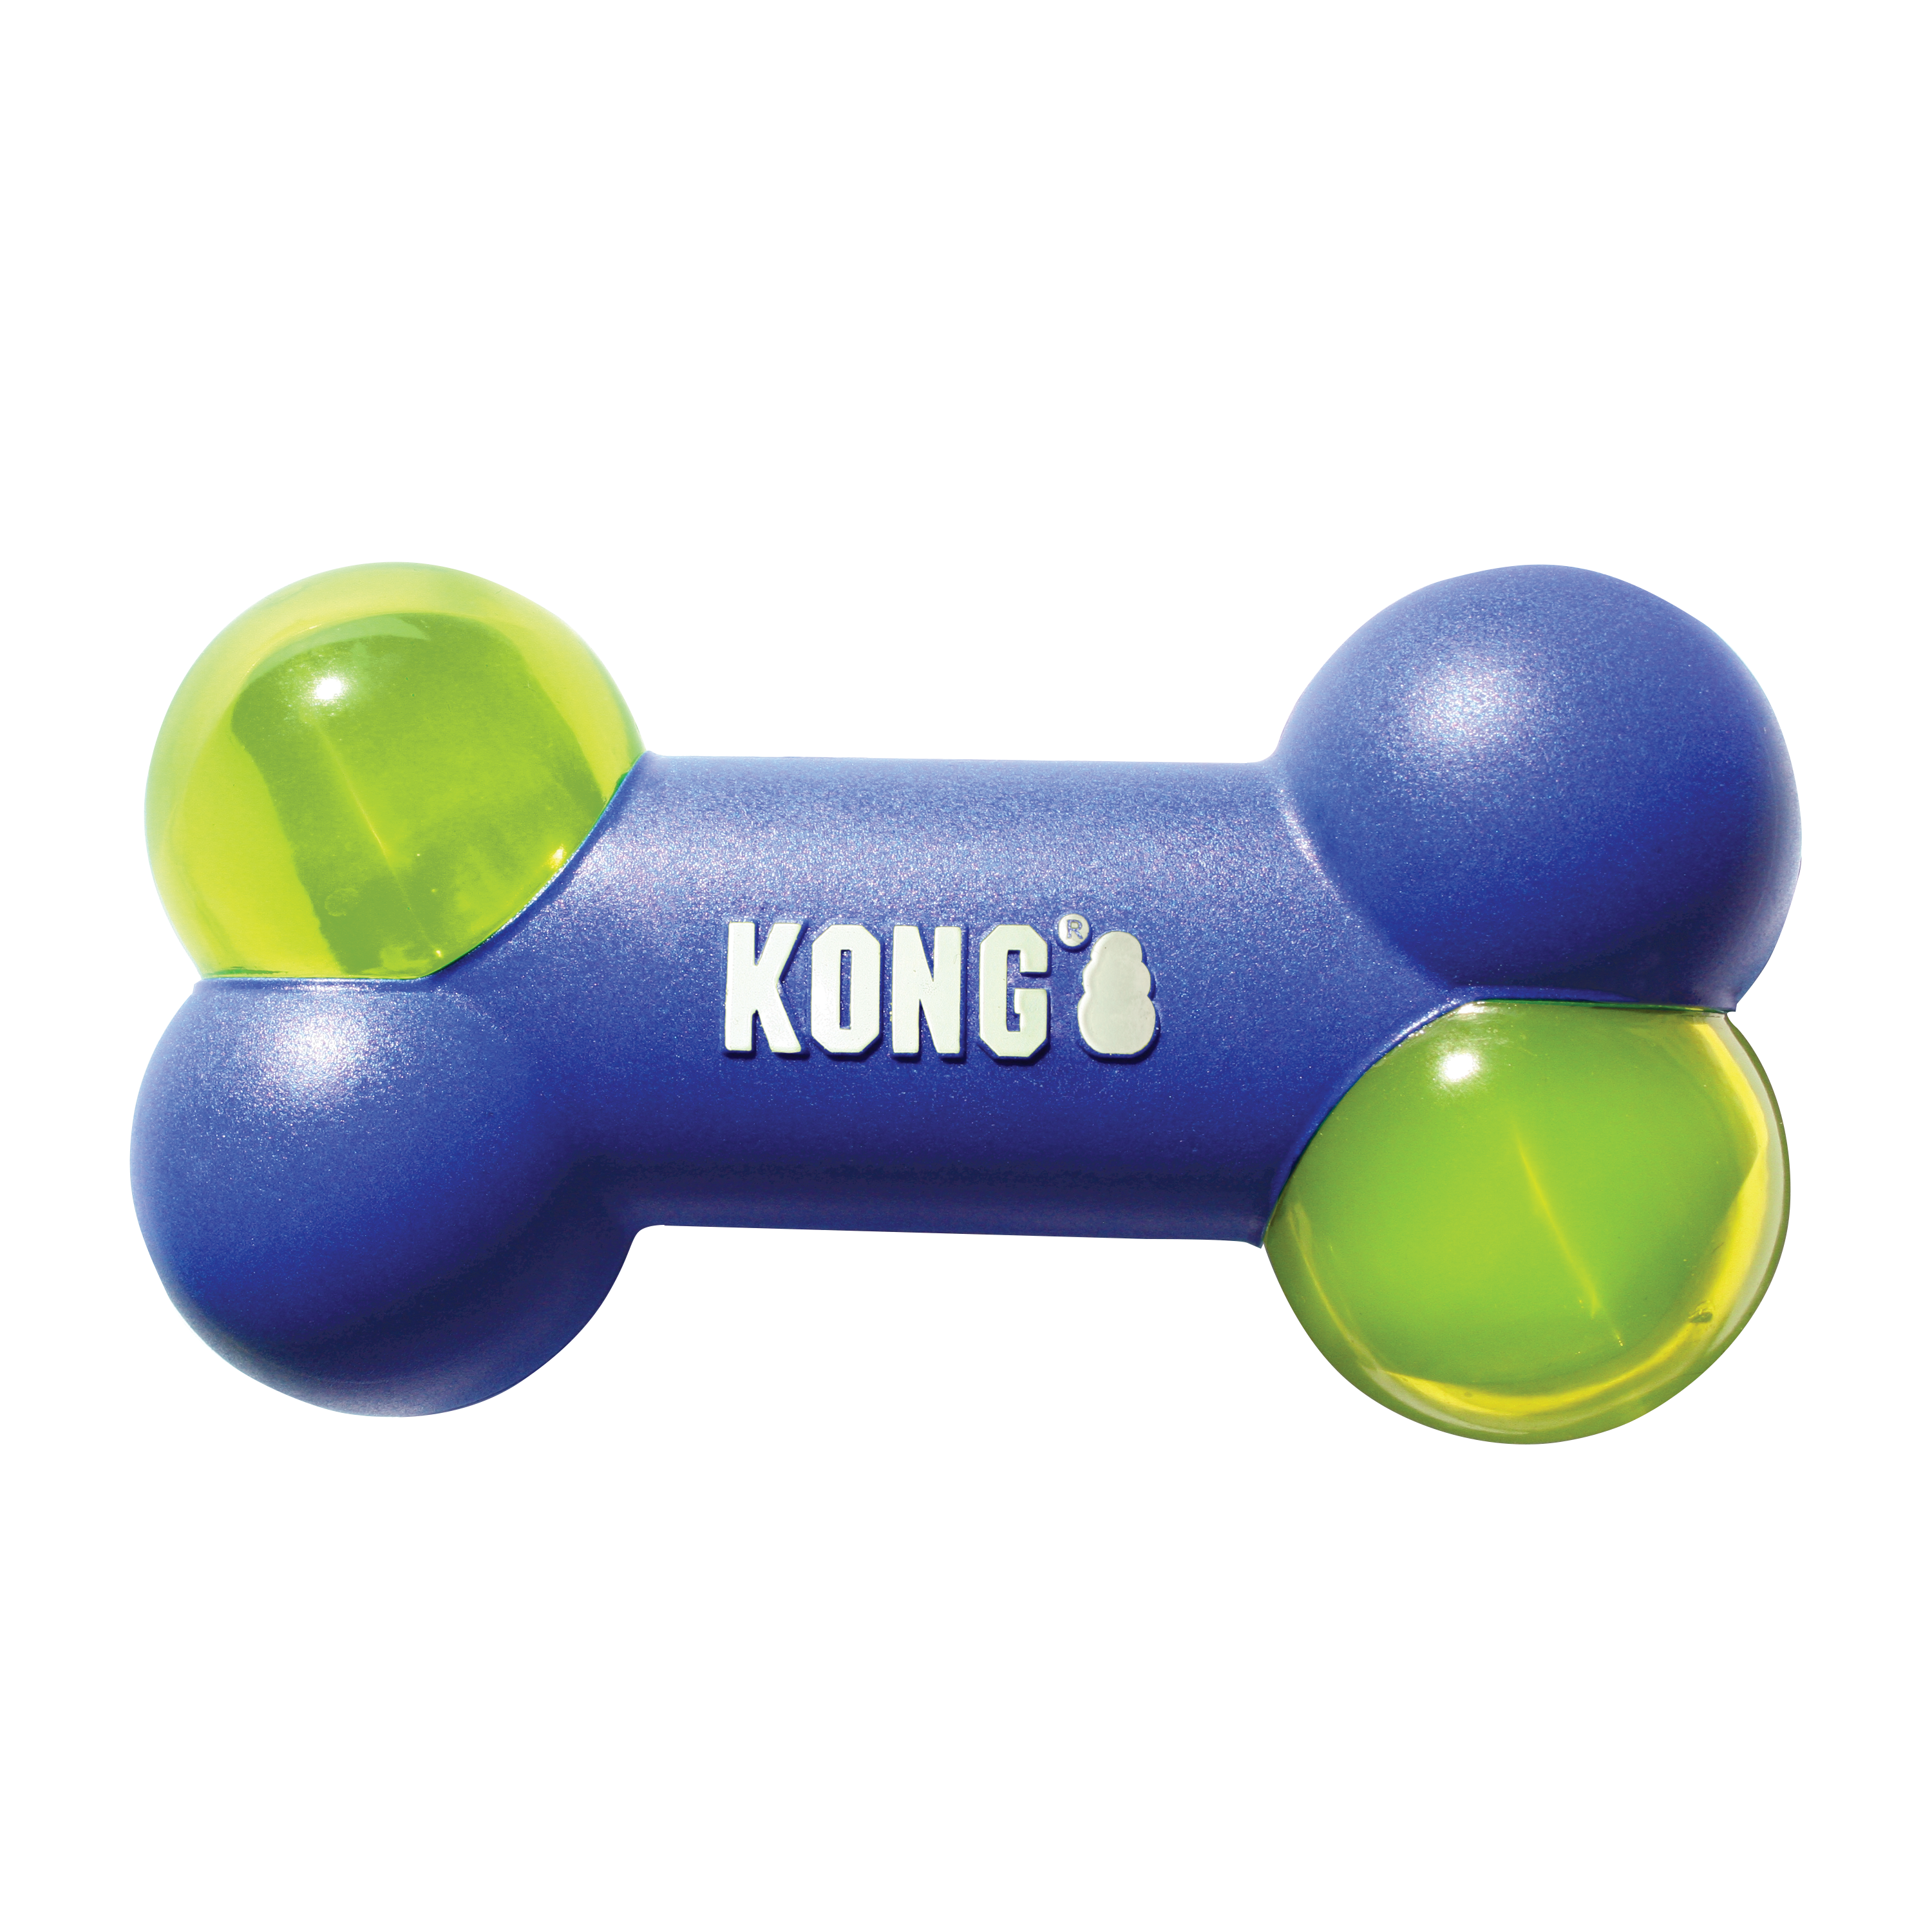 Kong company. Kong Squeezz мячик для собак. Конг синий. Kong игрушки молекула. Кость Конг.